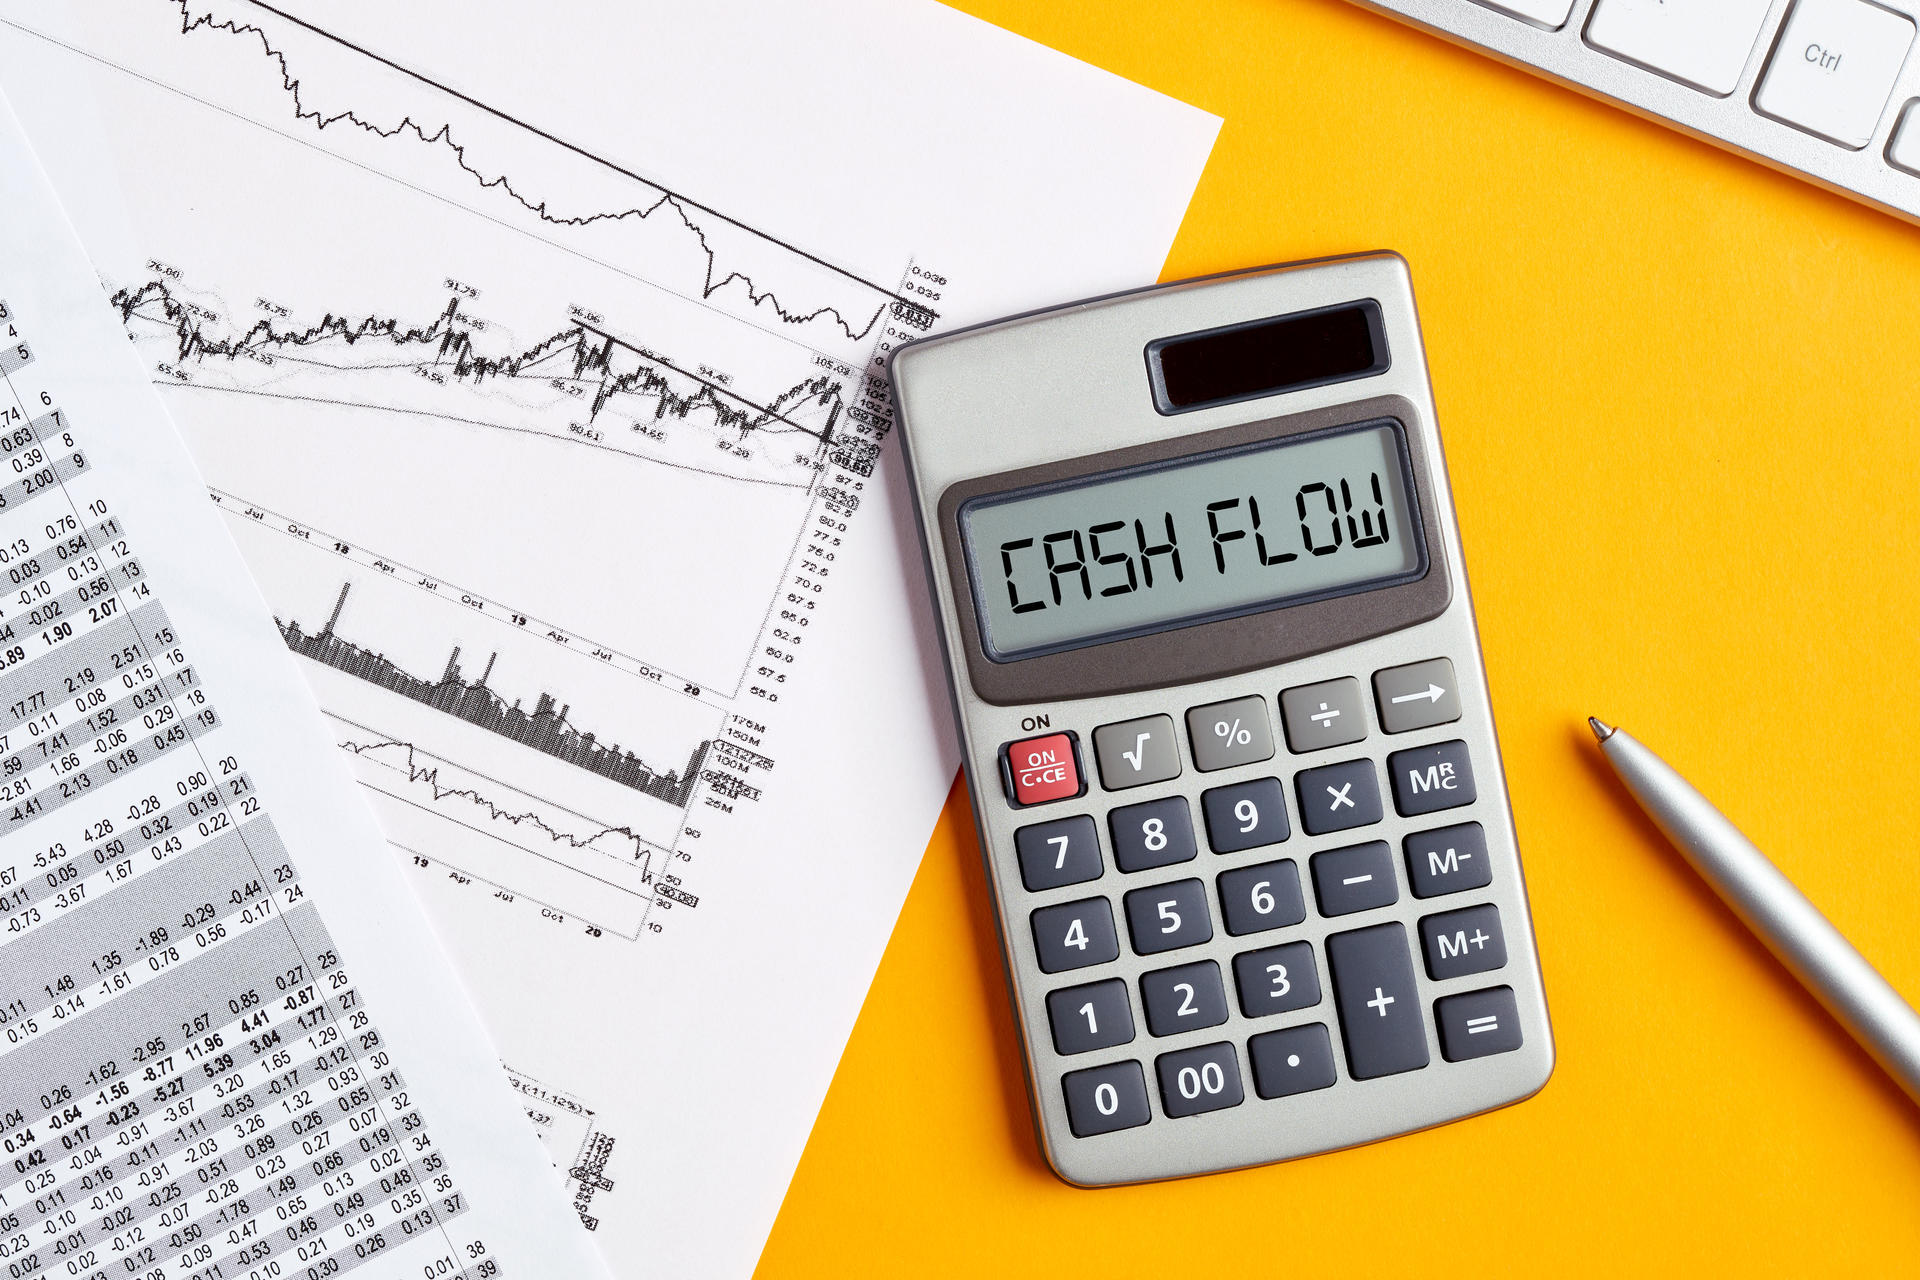 cash flow personal trainer business plan image